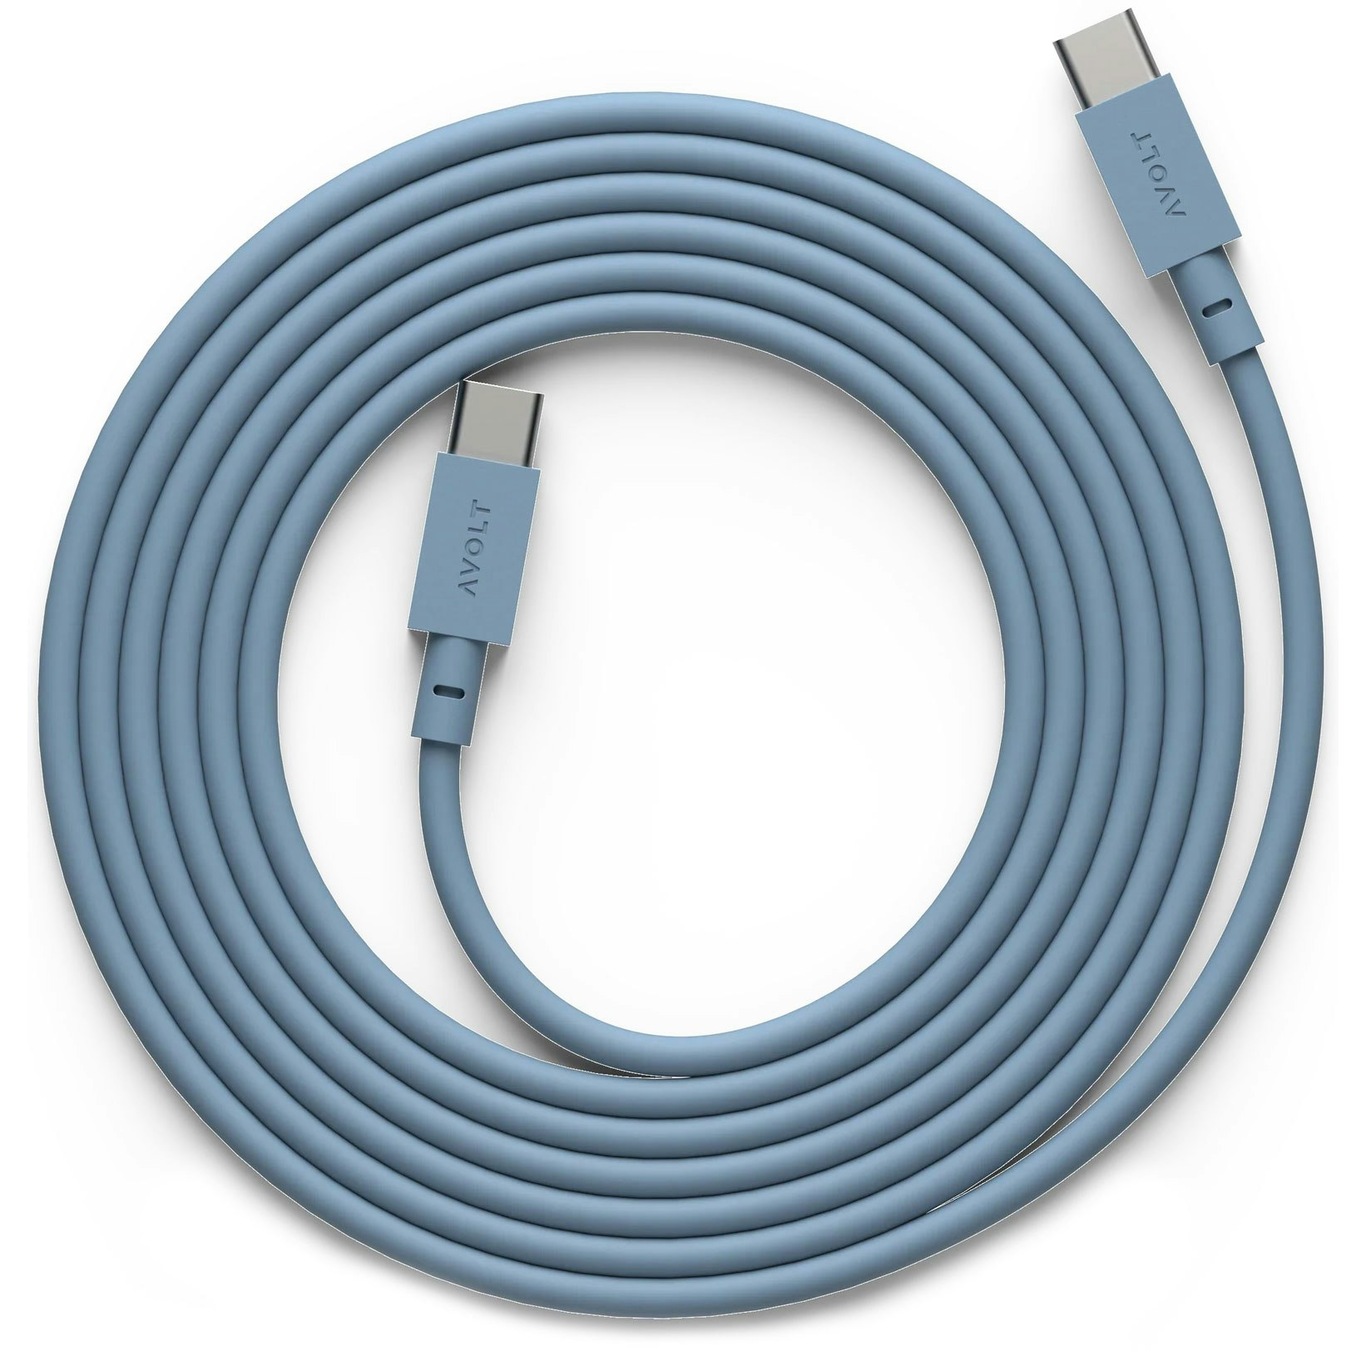 Cable 1 Opladningskabel USB-C / USB-C 2 m, Hajblåt